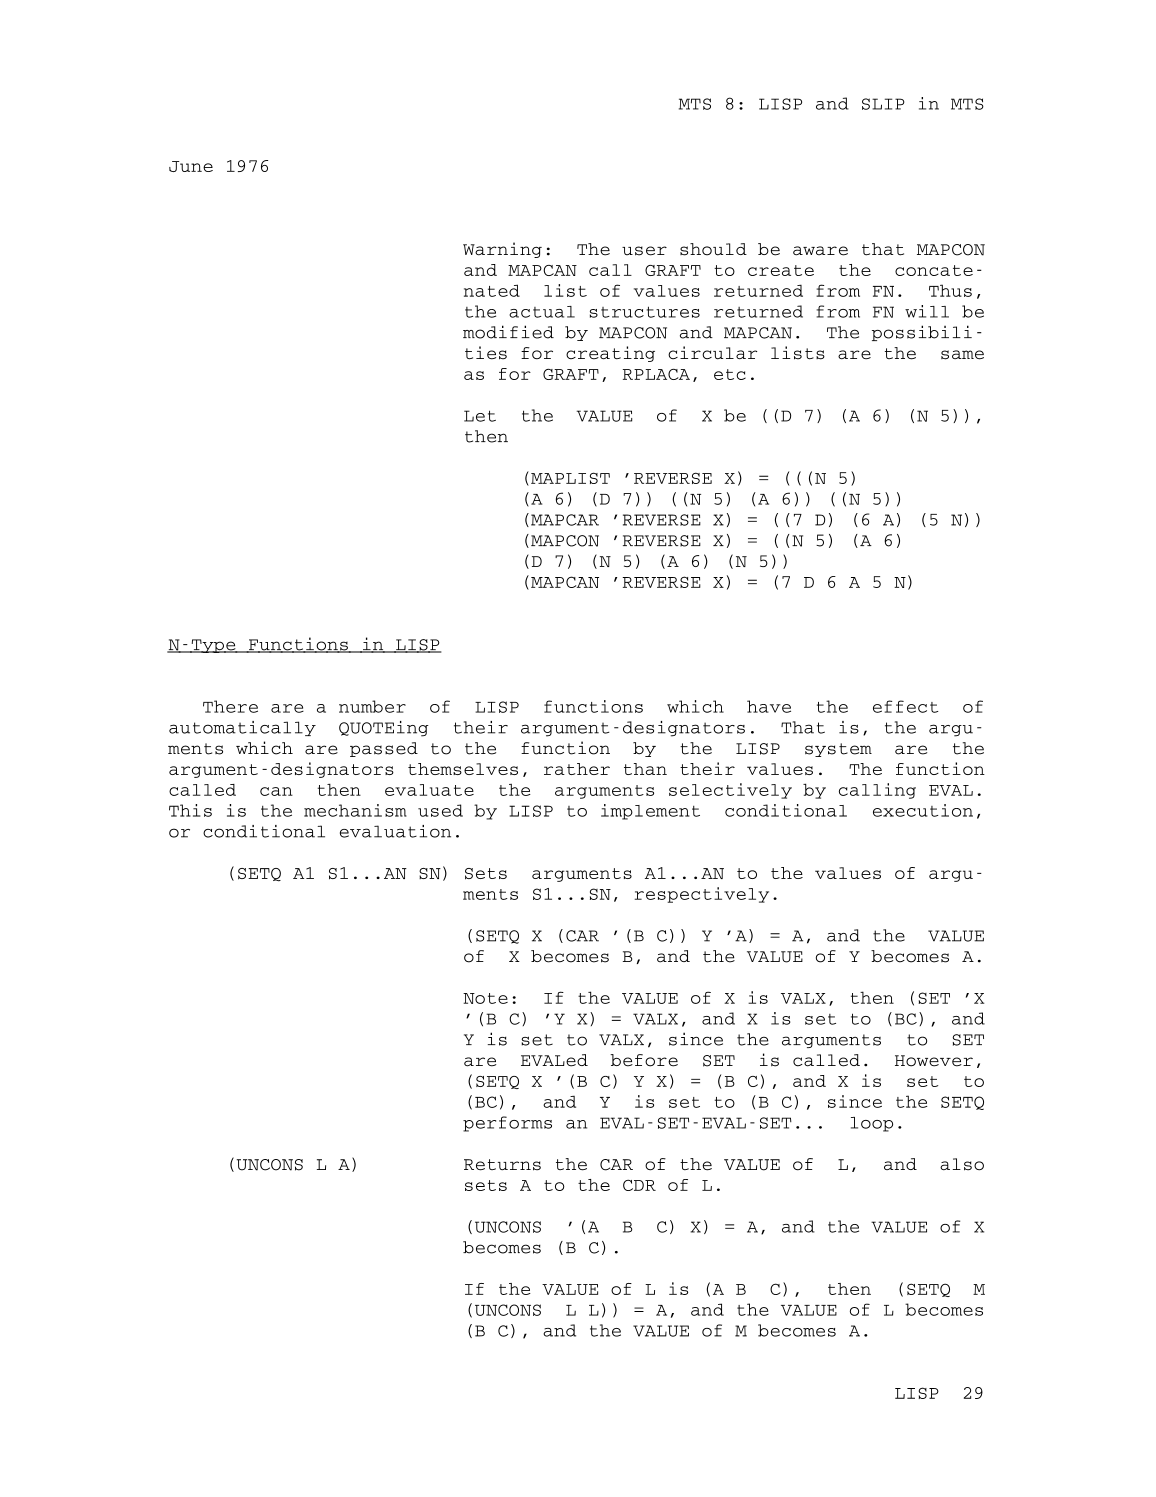 MTS Volume 8 - LISP and SLIP page 28